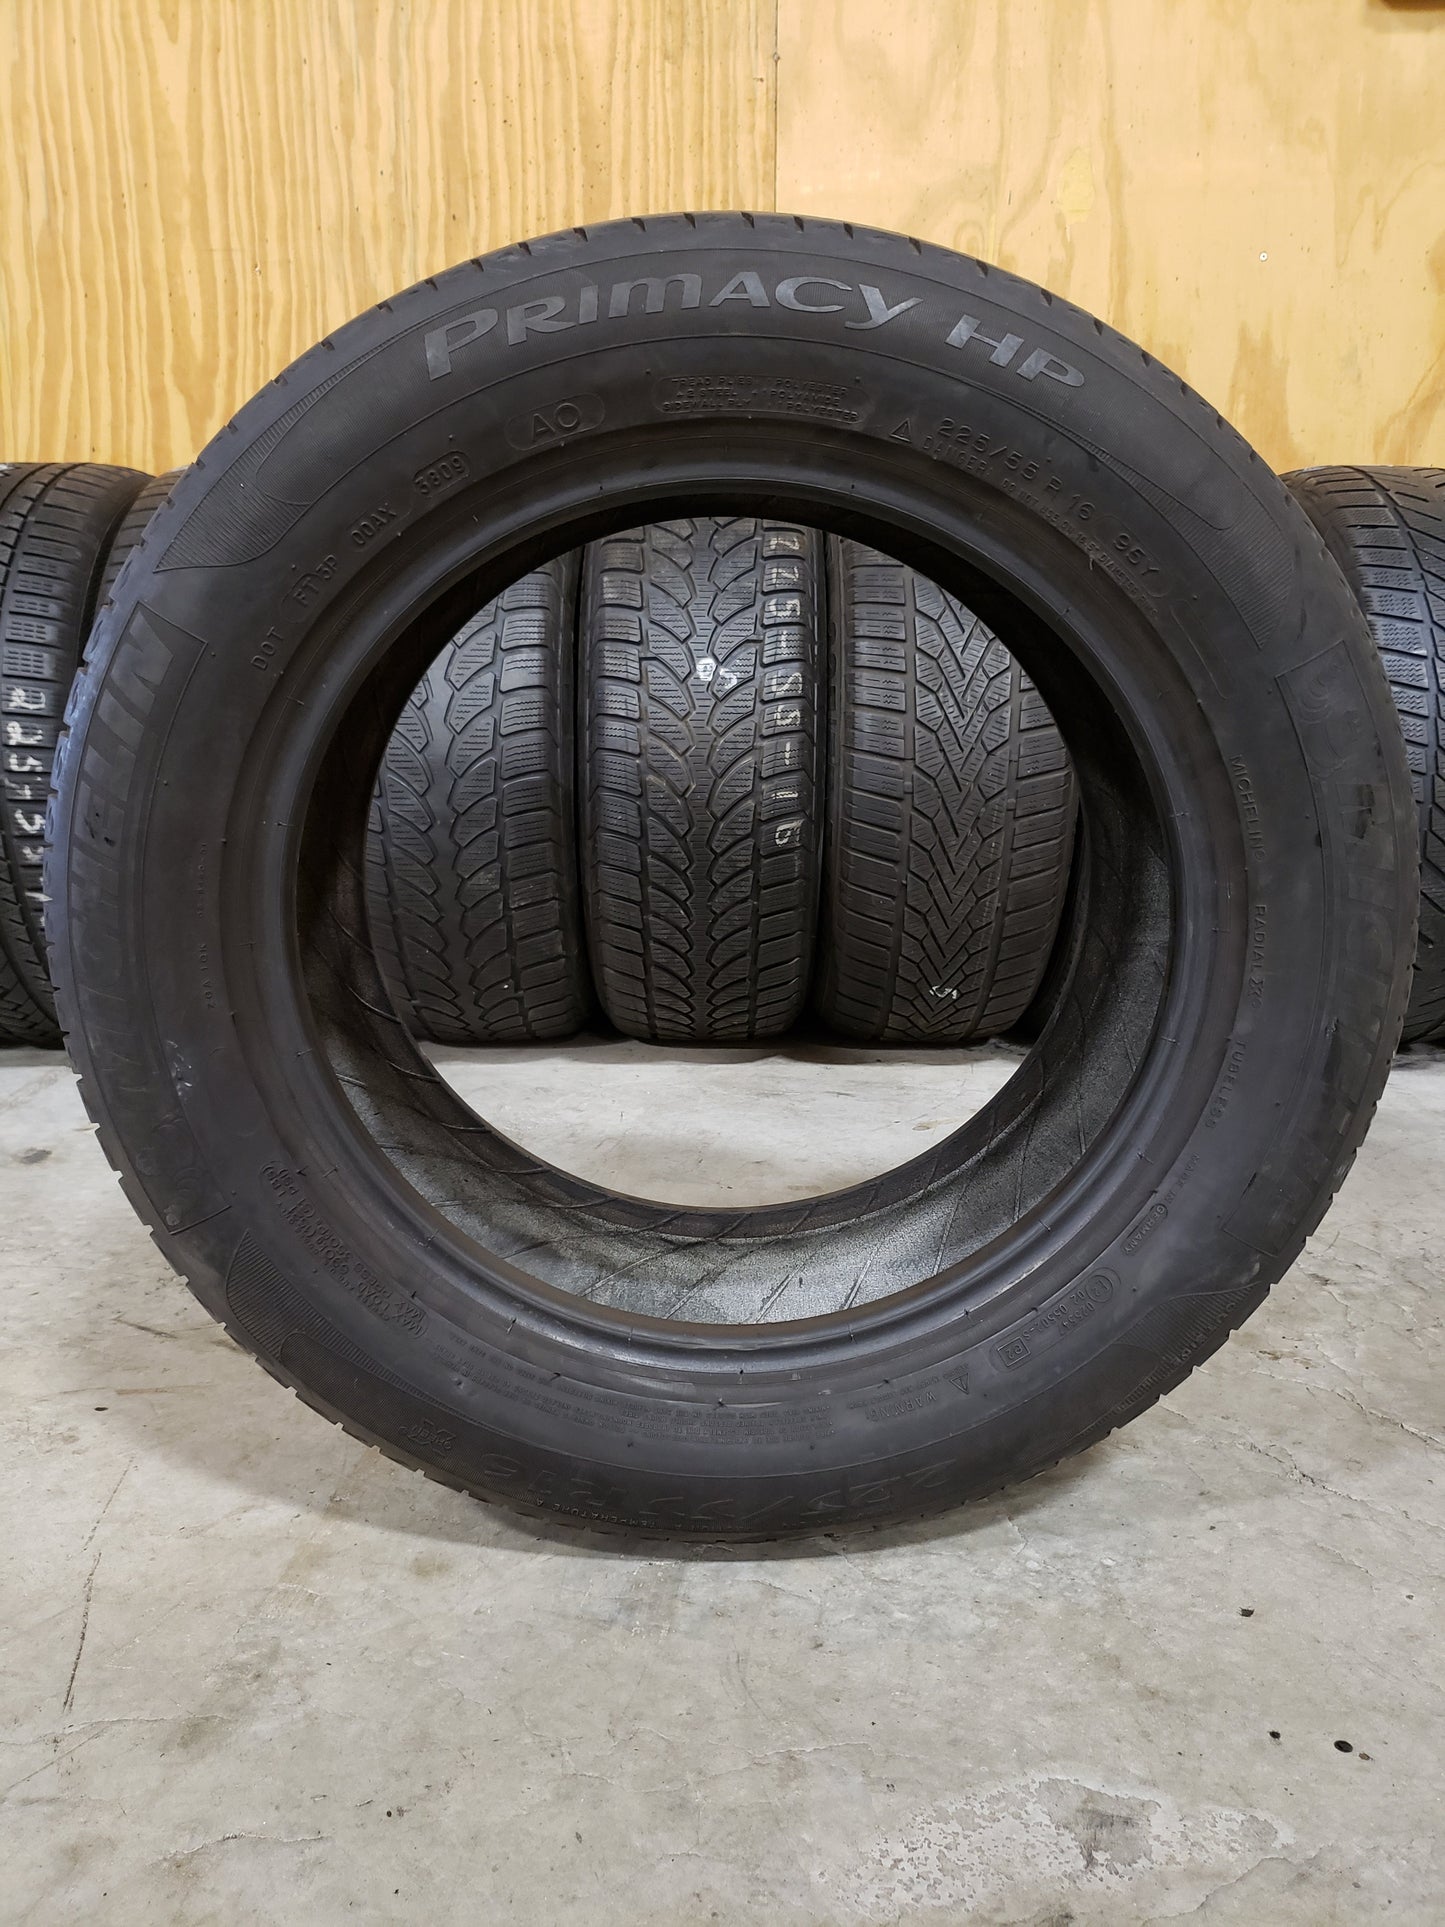 SINGLE 225/55R16 Michelin Primacy HP 95Y XL - Used Tires